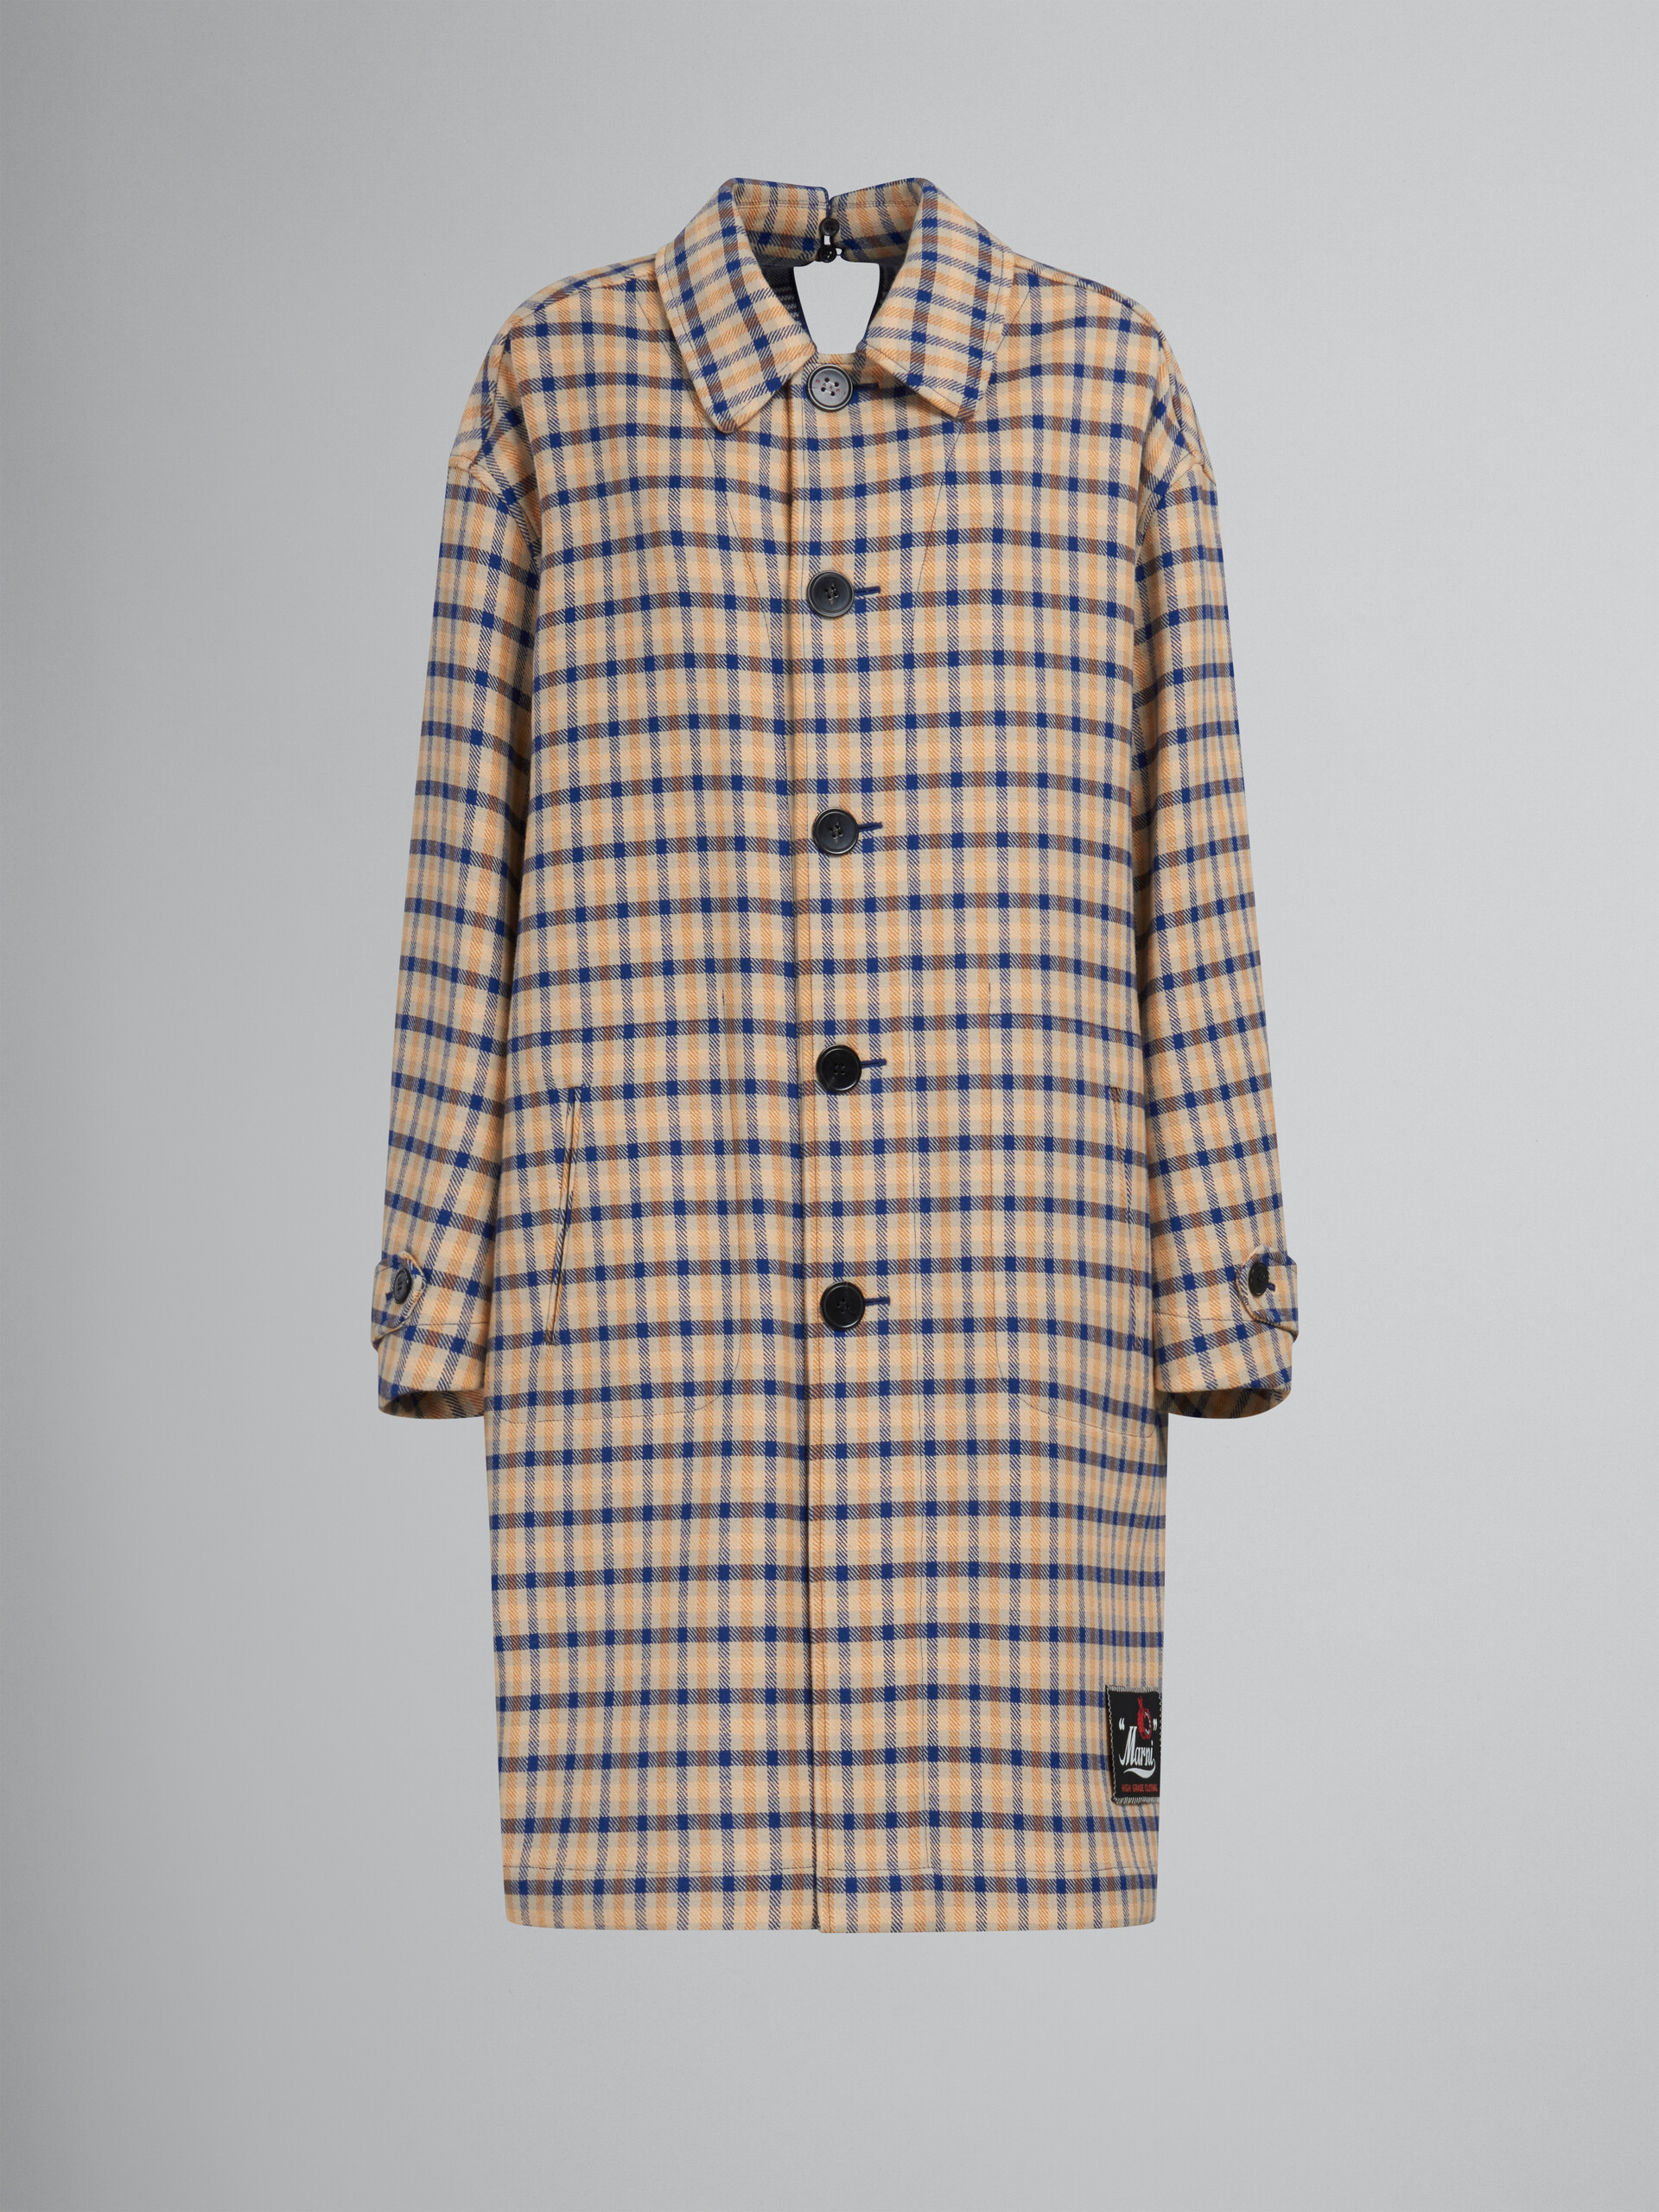 Abrigo reversible de lana azul y amarilla a cuadros - Abrigos - Image 1